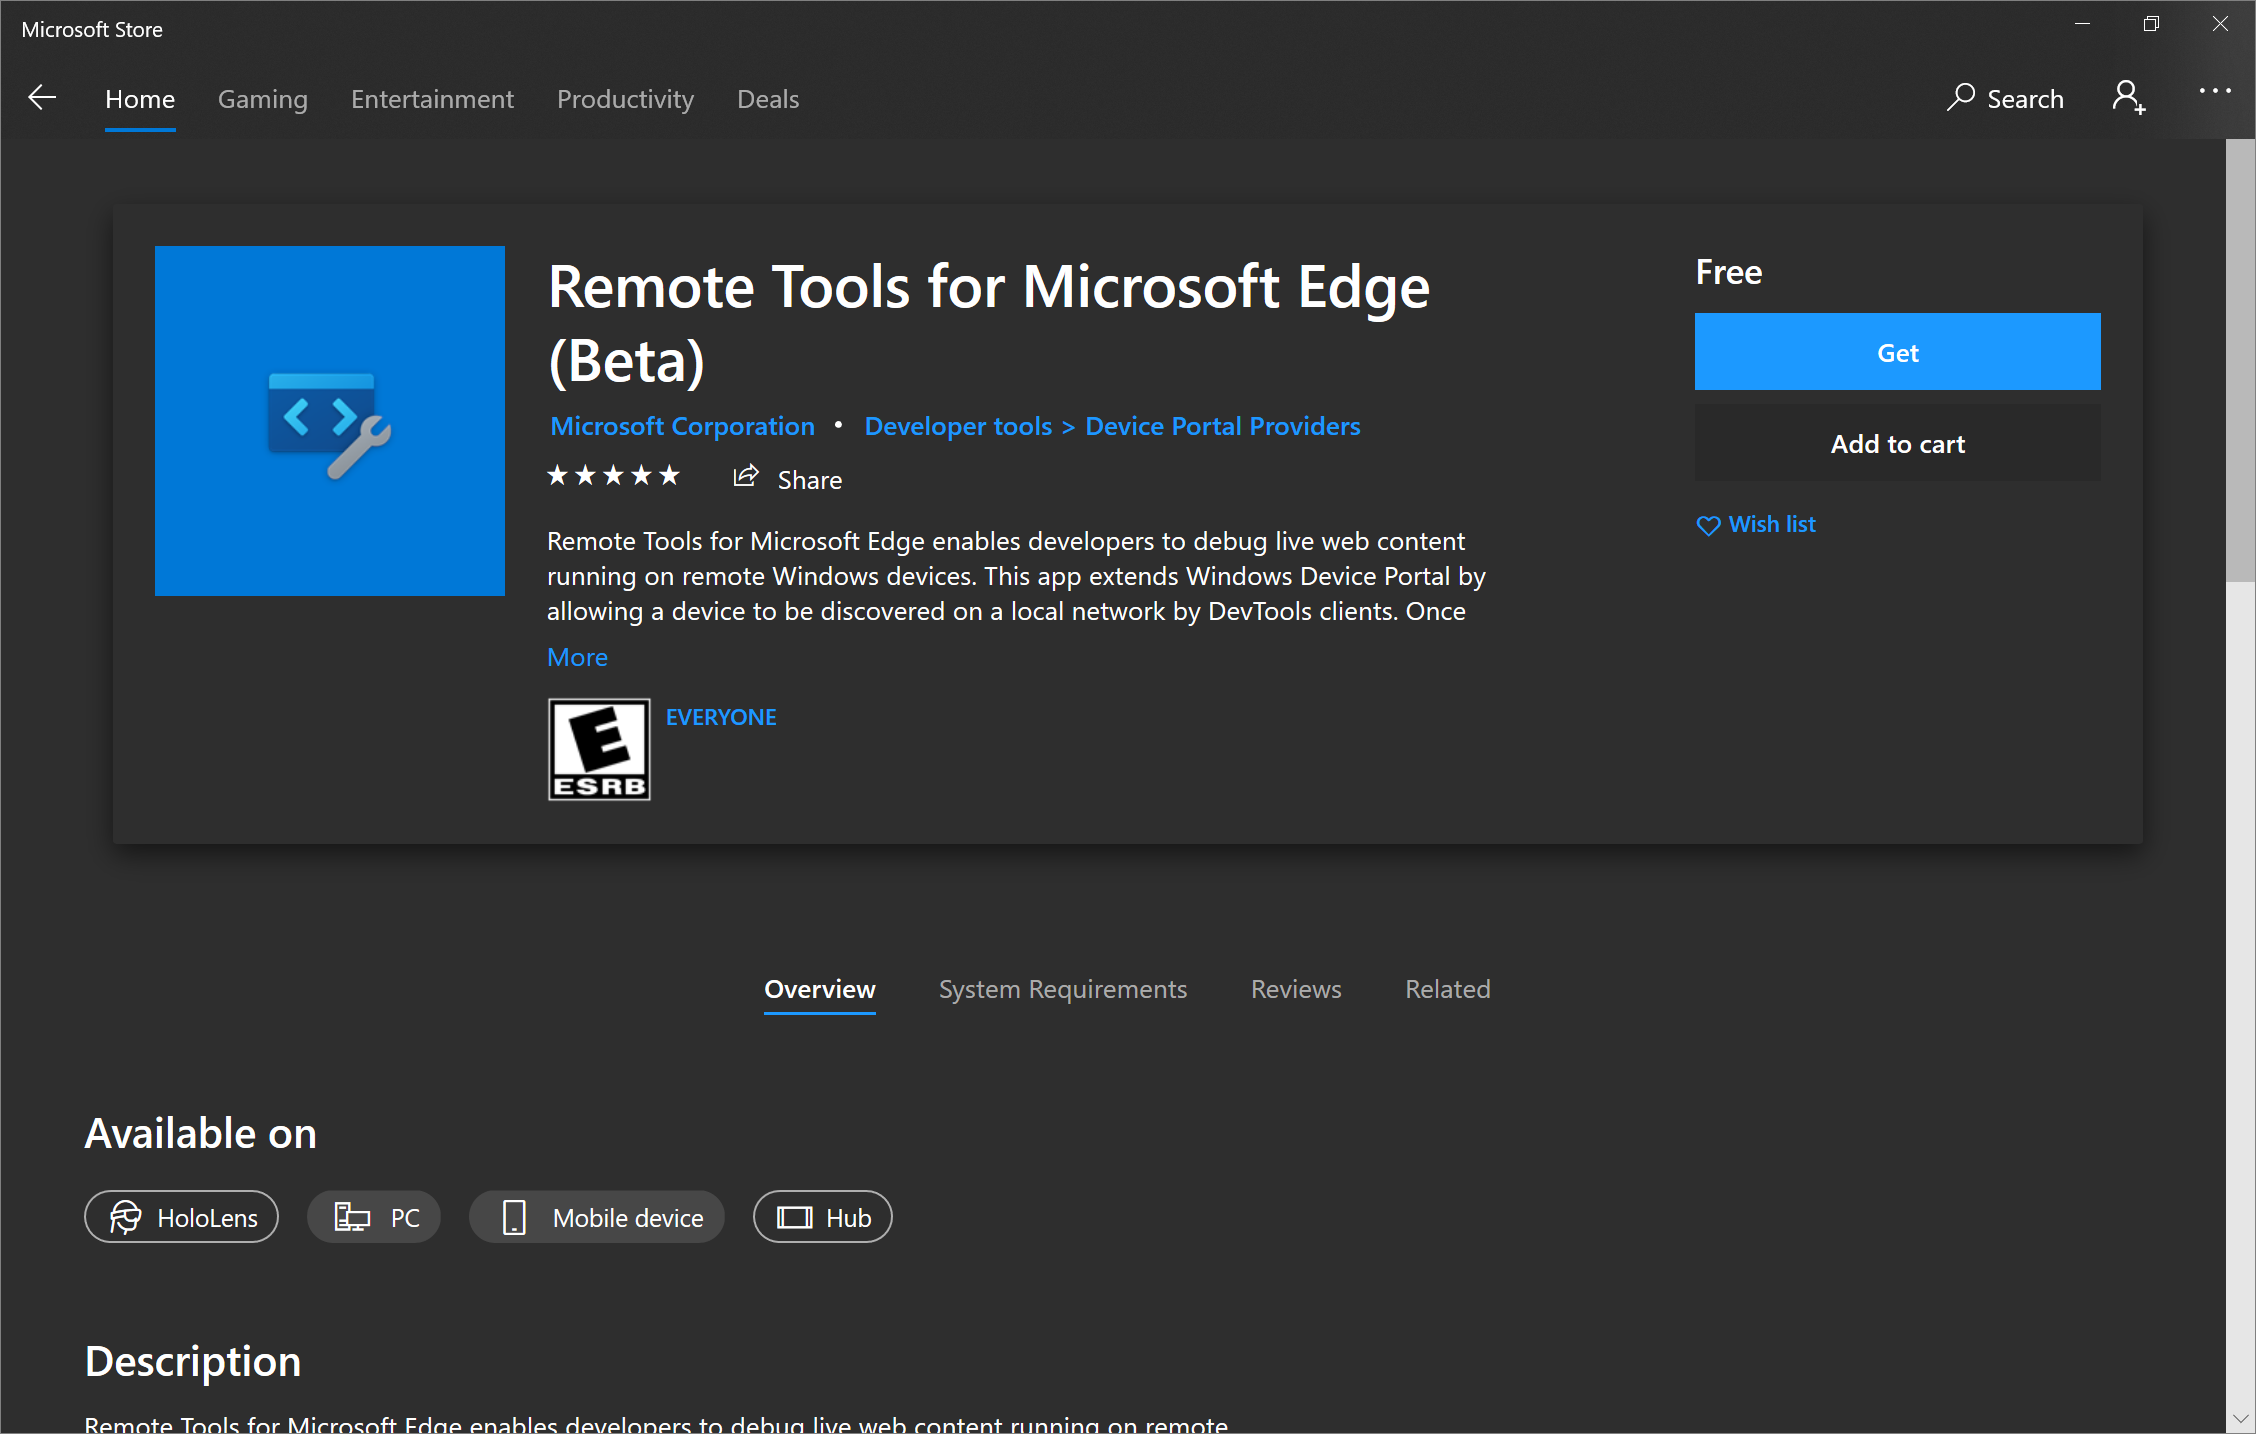 The Remote Tools for Microsoft Edge (Beta) in the Microsoft Store